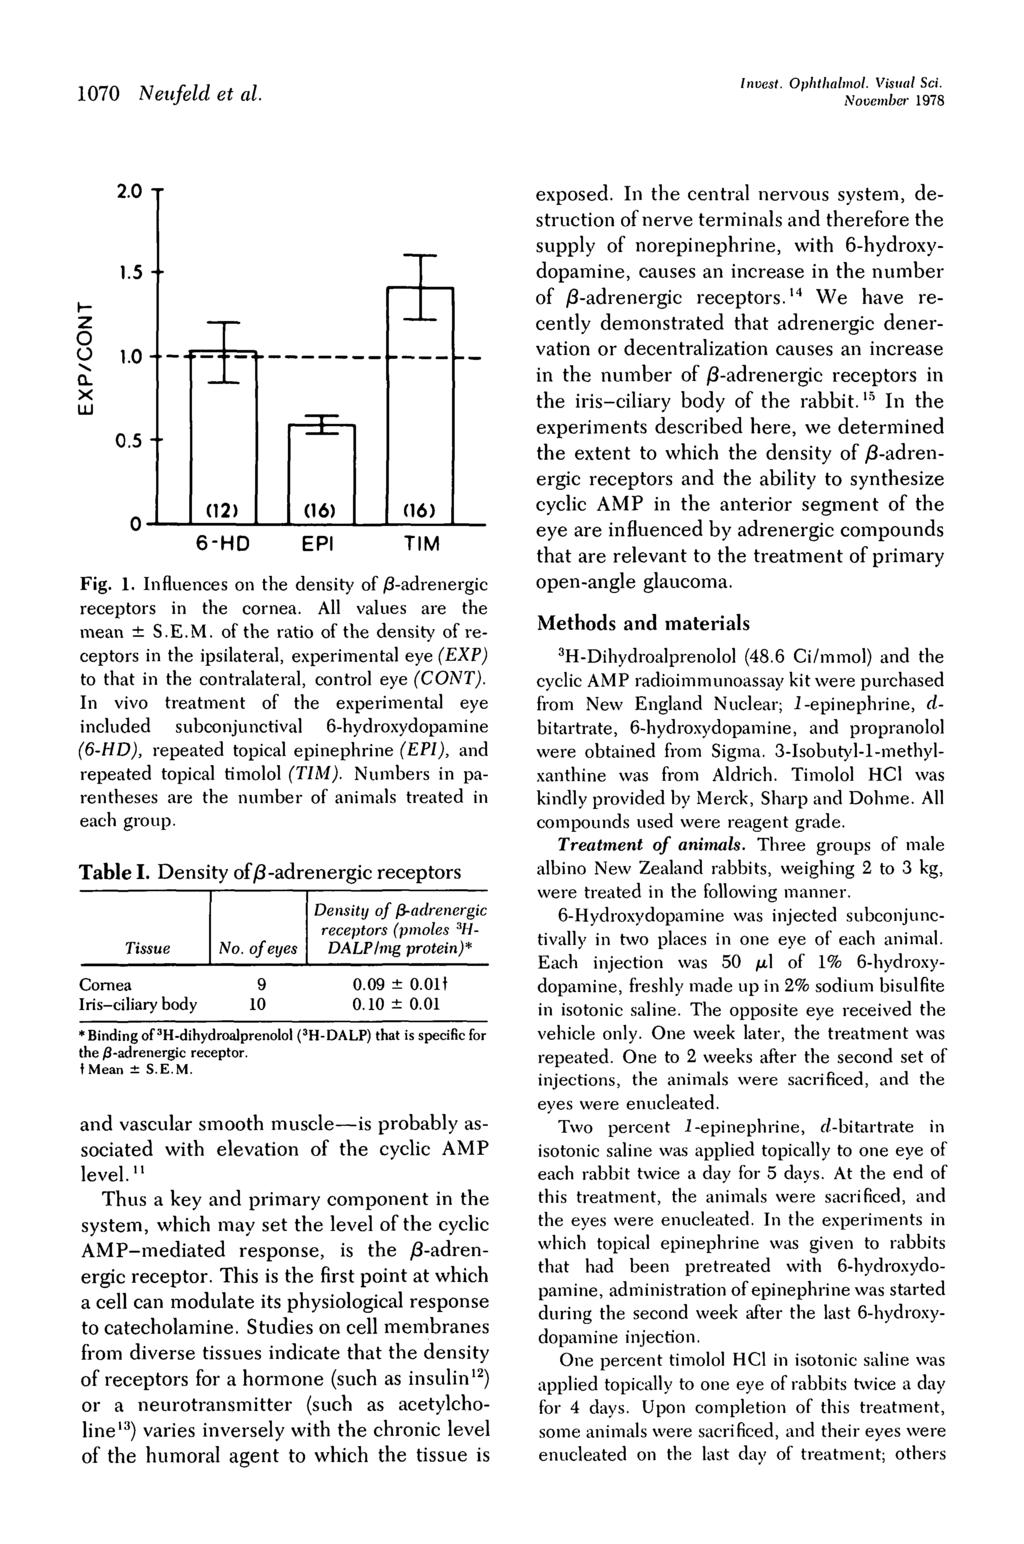 1070 Neufeld et al. Invest. Ophthalmol. Visual Sci. November 1978 2.0 T 1.5 O O 1.0 CL X LU 0.5- (12) (16) (16) 6-HD EPI TIM Fig. 1. Influences on the density of /3-adrenergic receptors in the cornea.